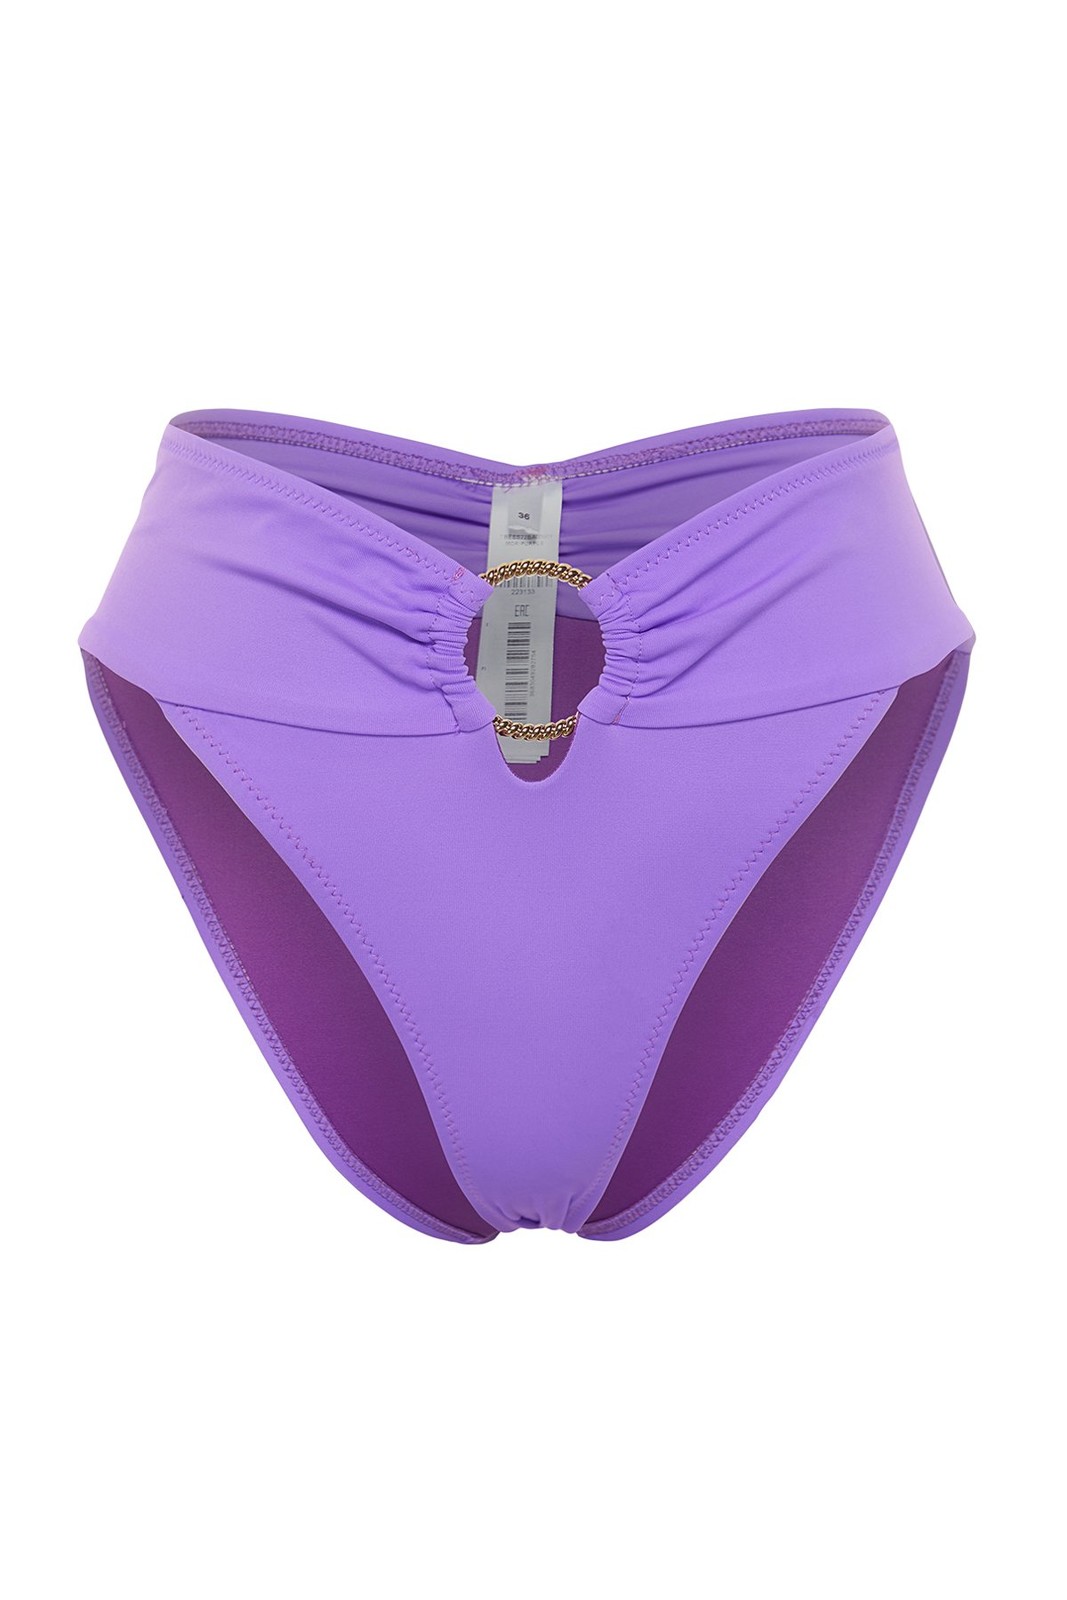 Trendyol Purple Accessory High Waist High Leg Bikini Bottom